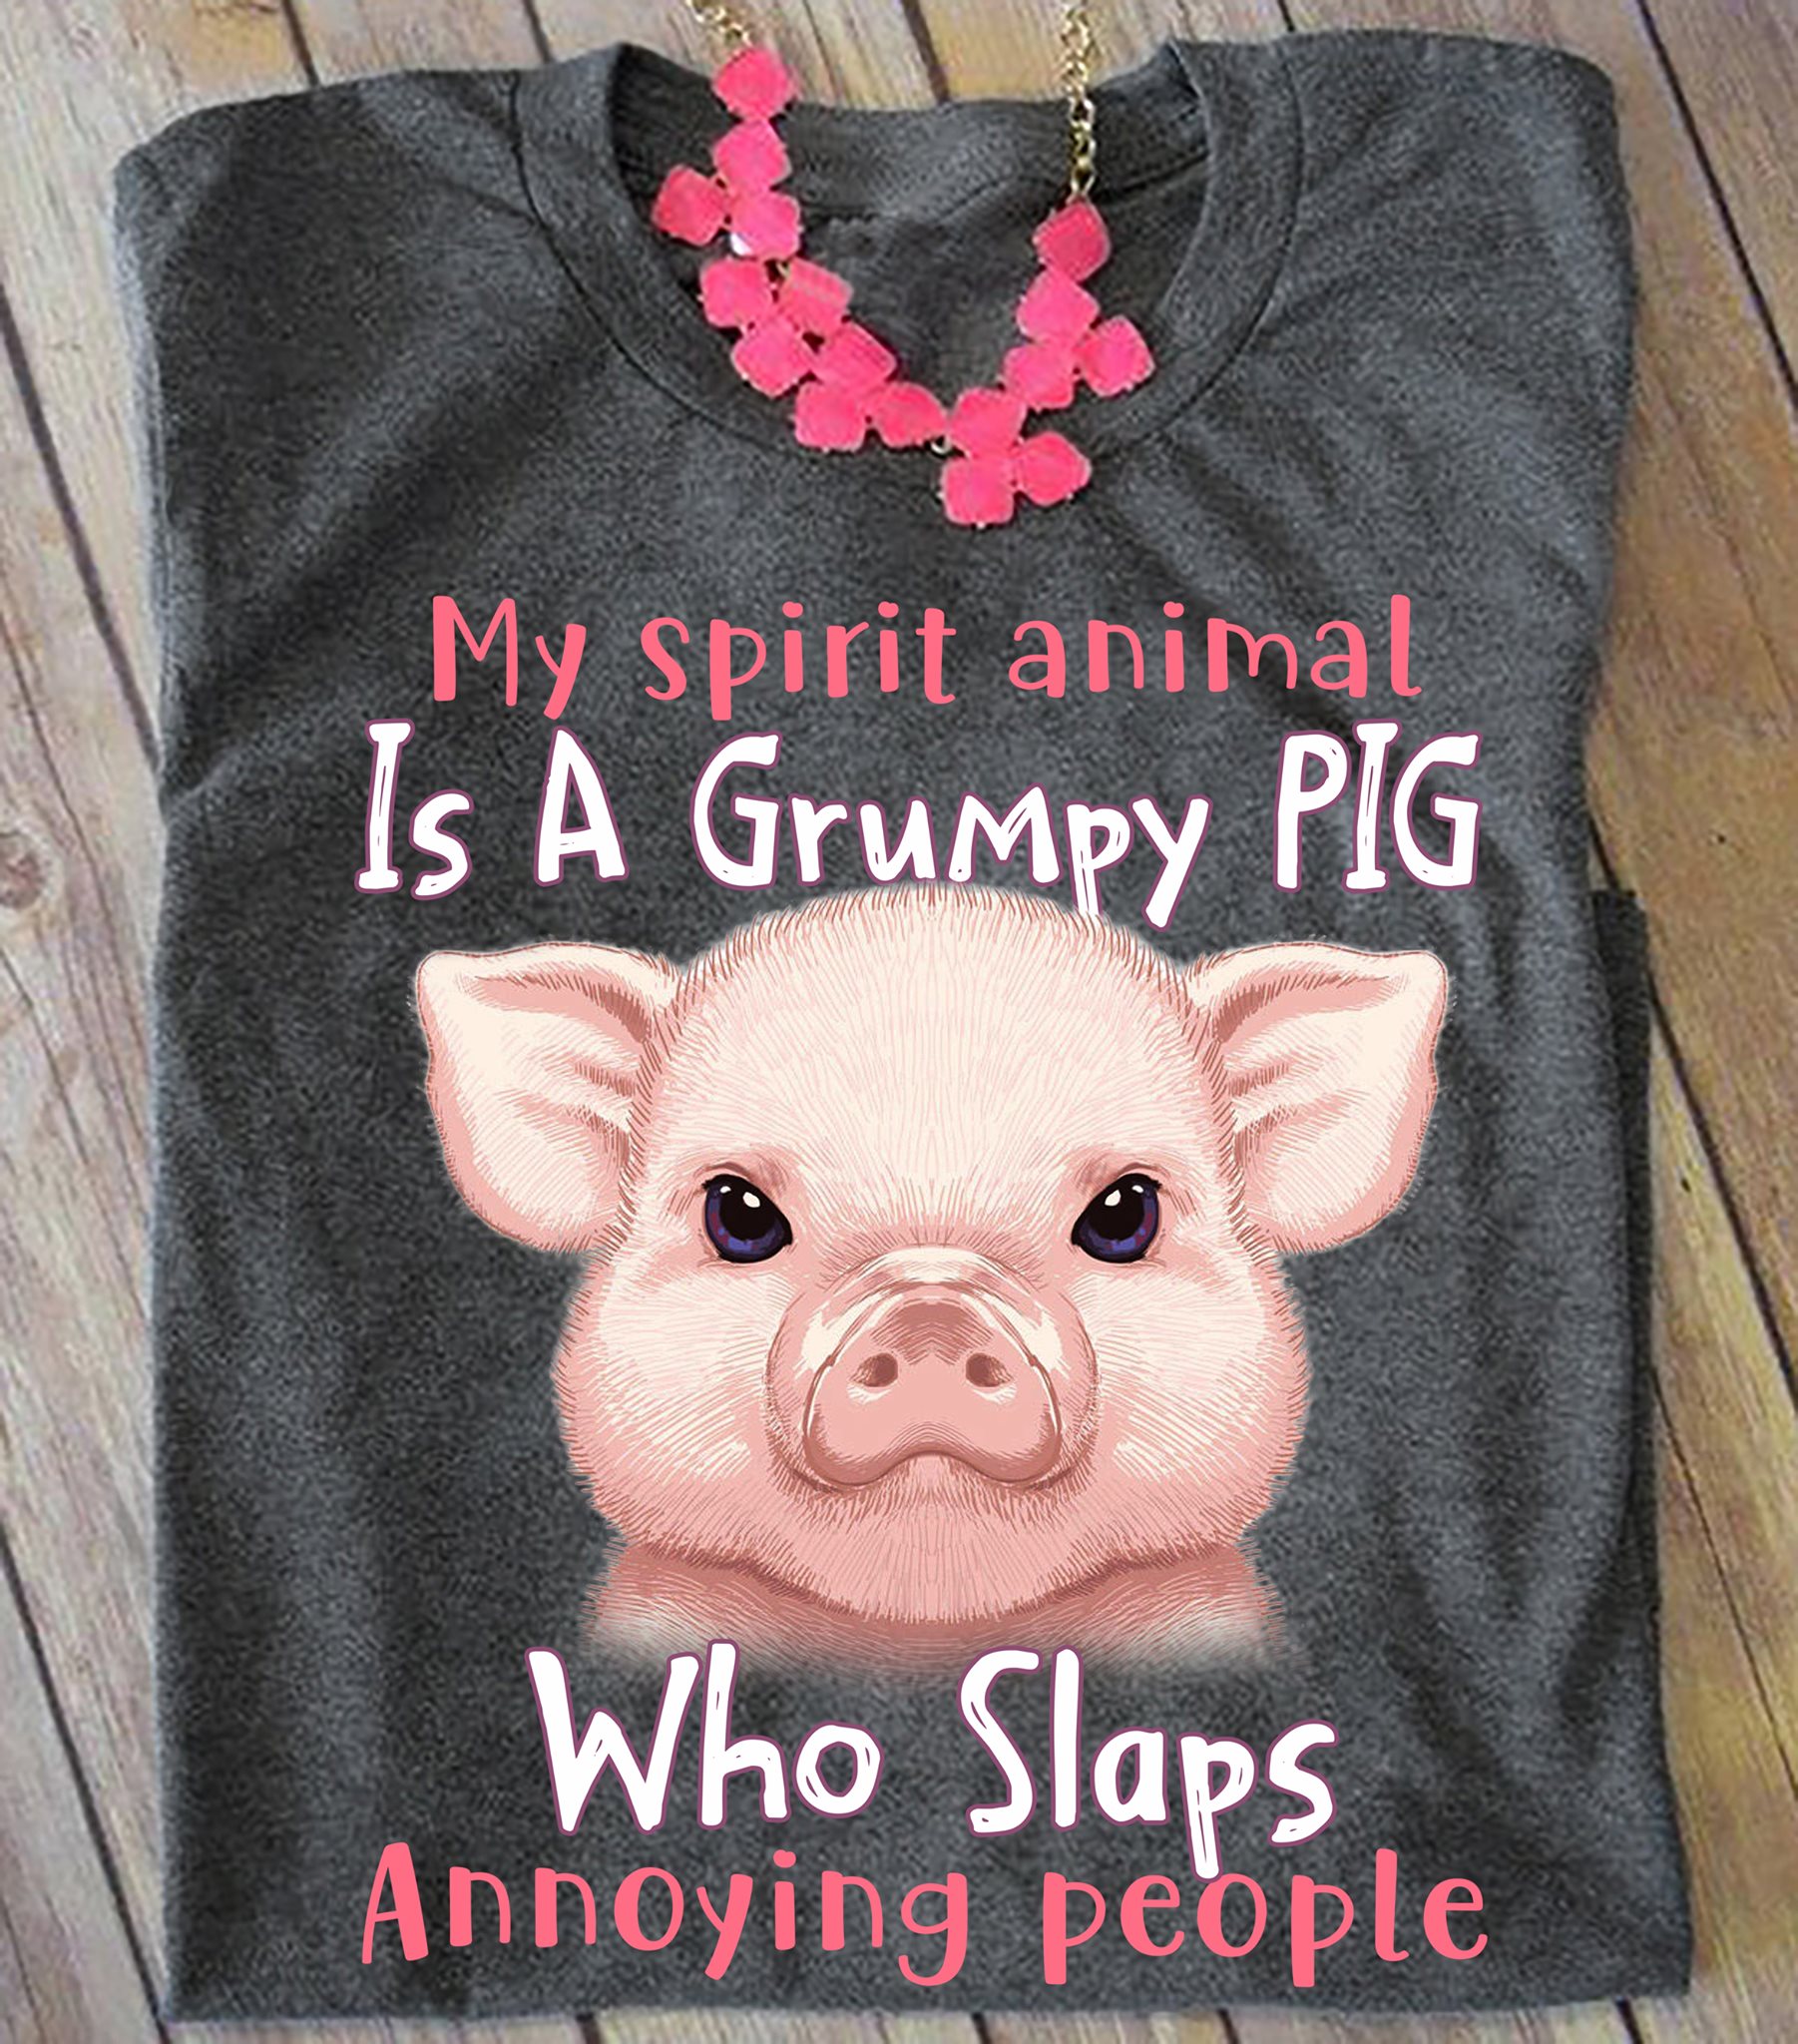 My spirit animal is a grumpy pig who slaps annoying people